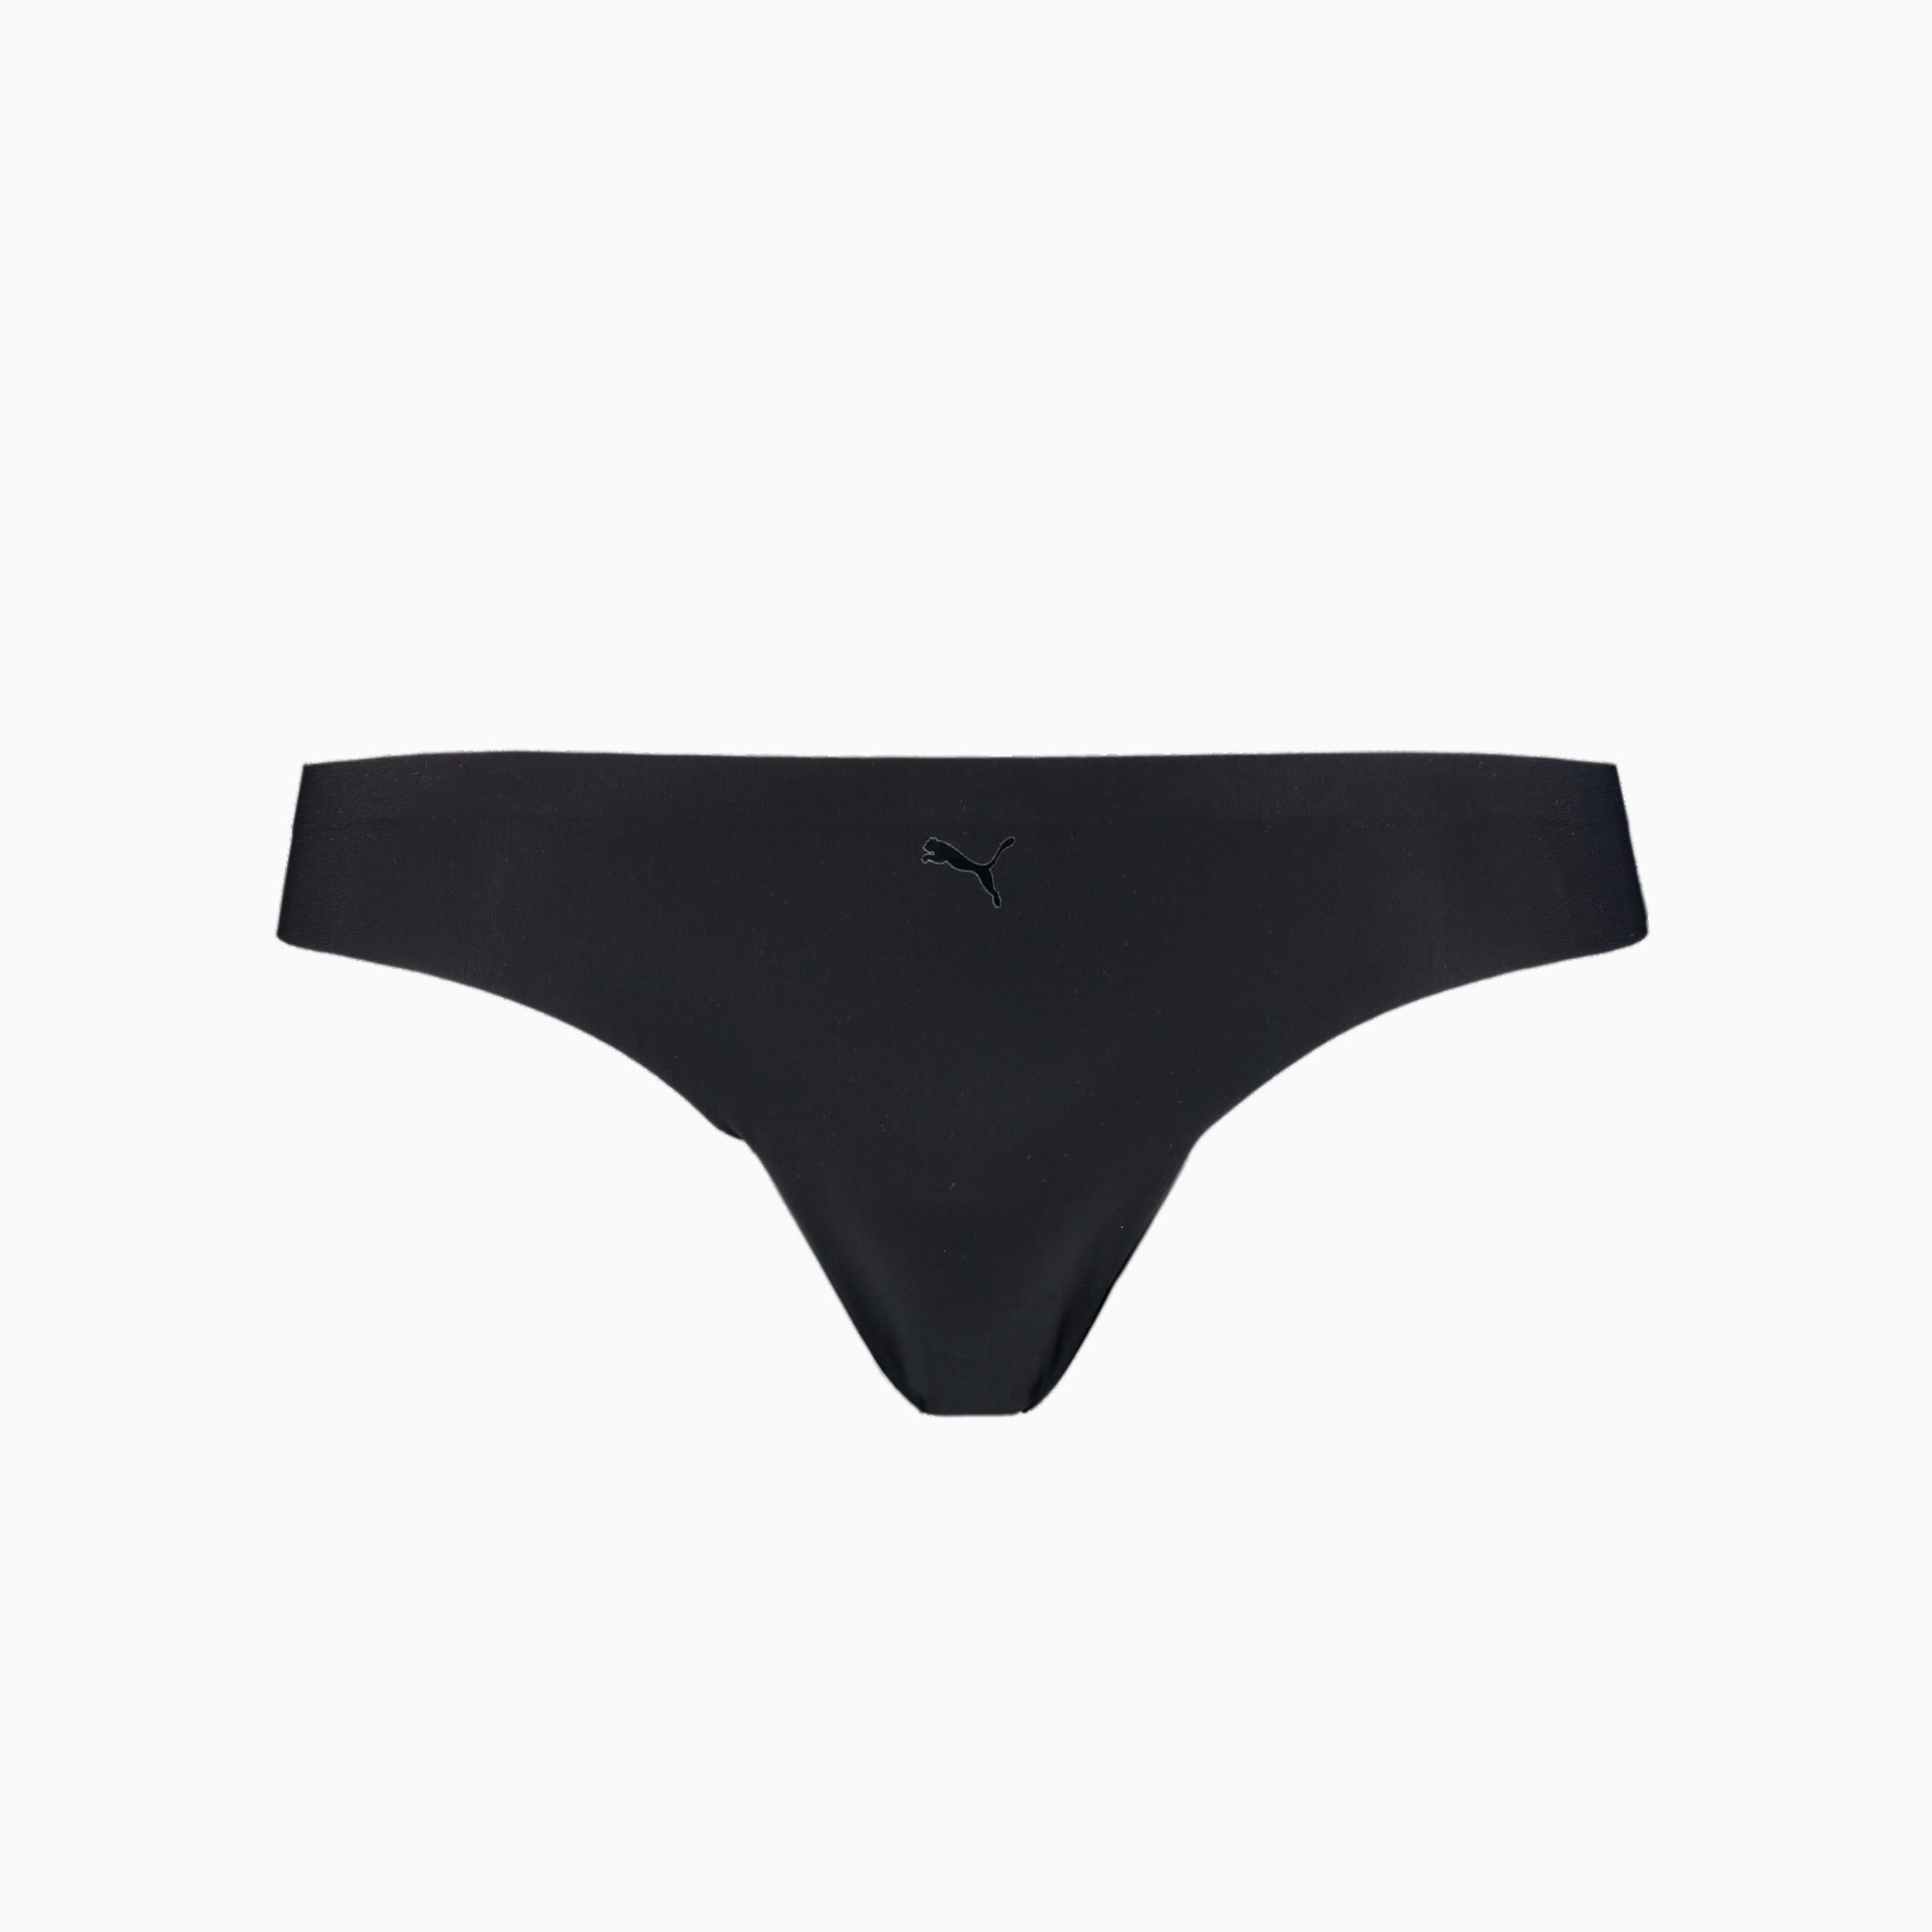 Underwear from Puma for Women in Black